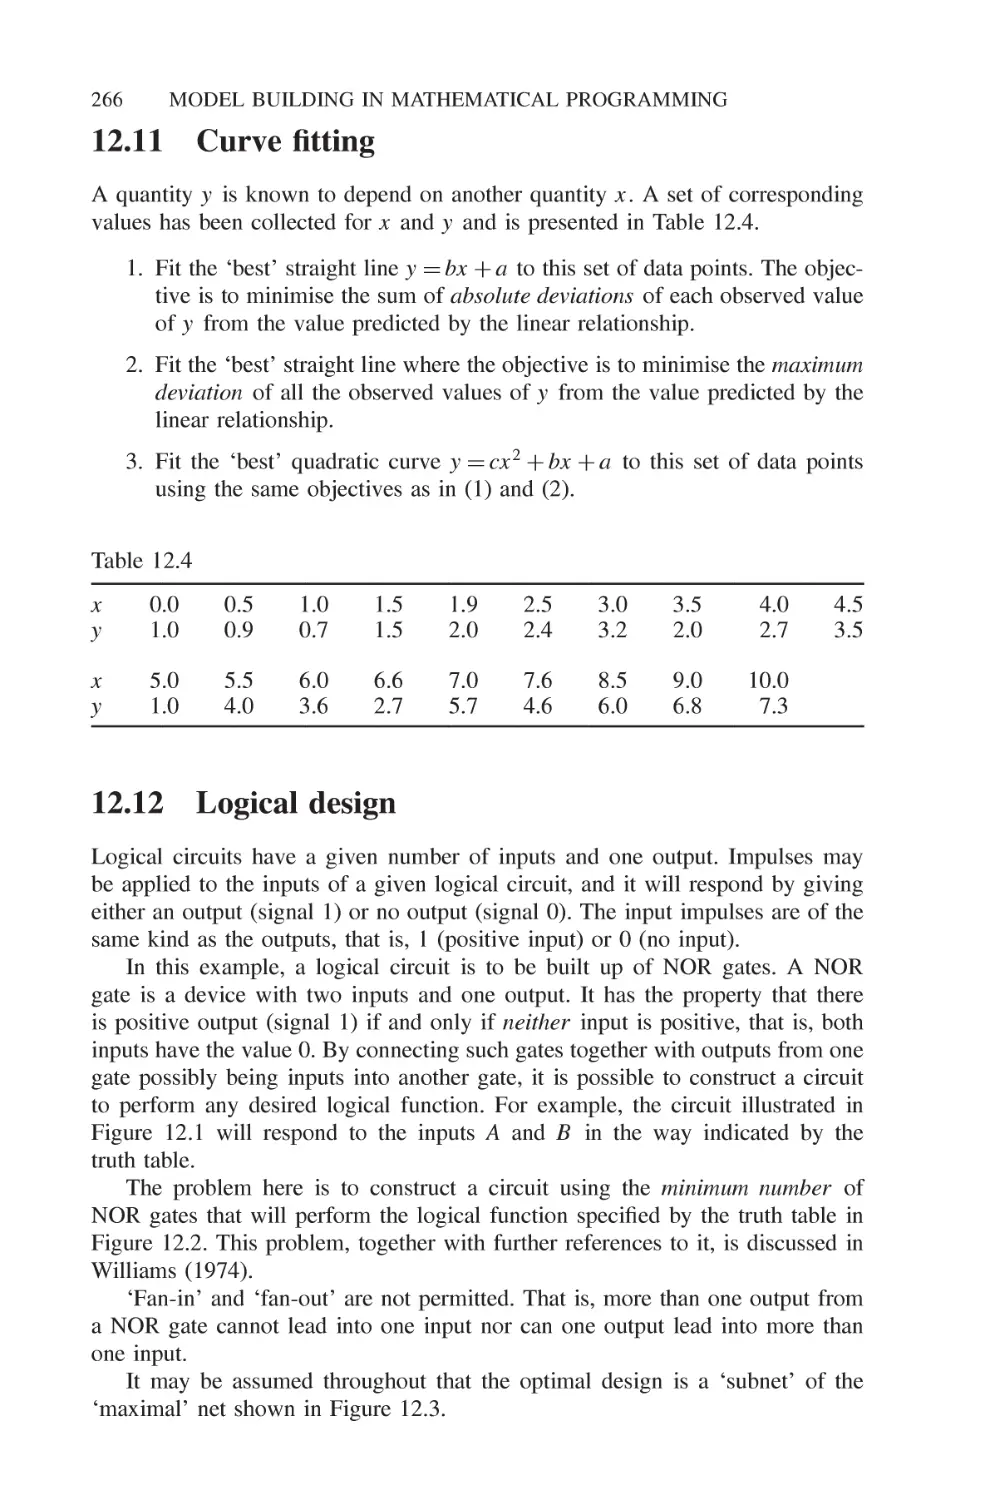 12.11 Curve fitting
12.12 Logical design